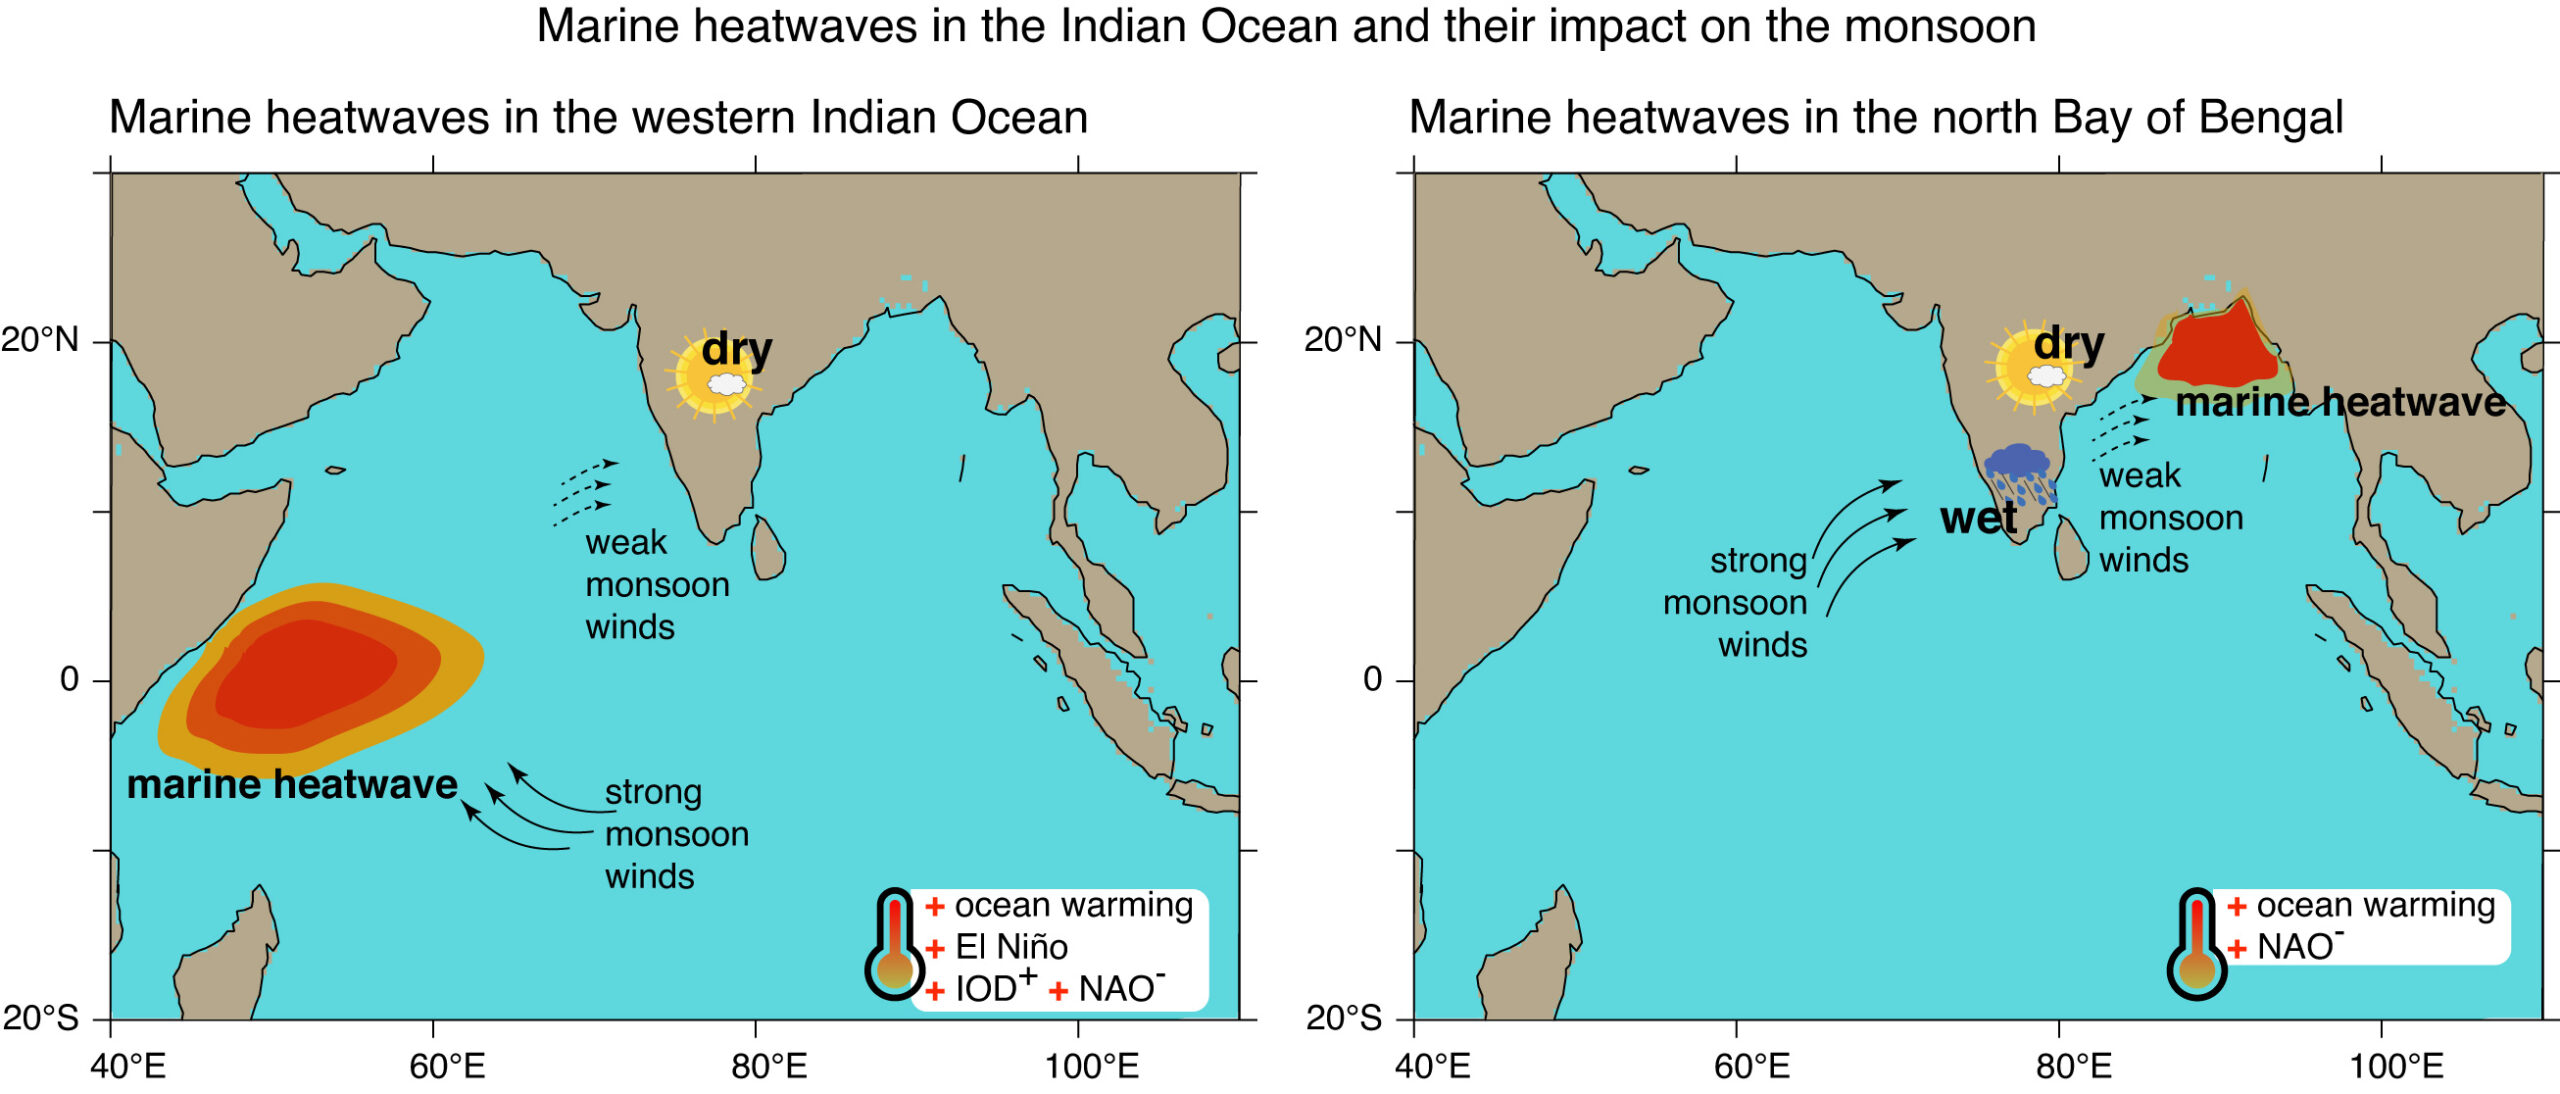 impact of marine heatwaves on the monsoon